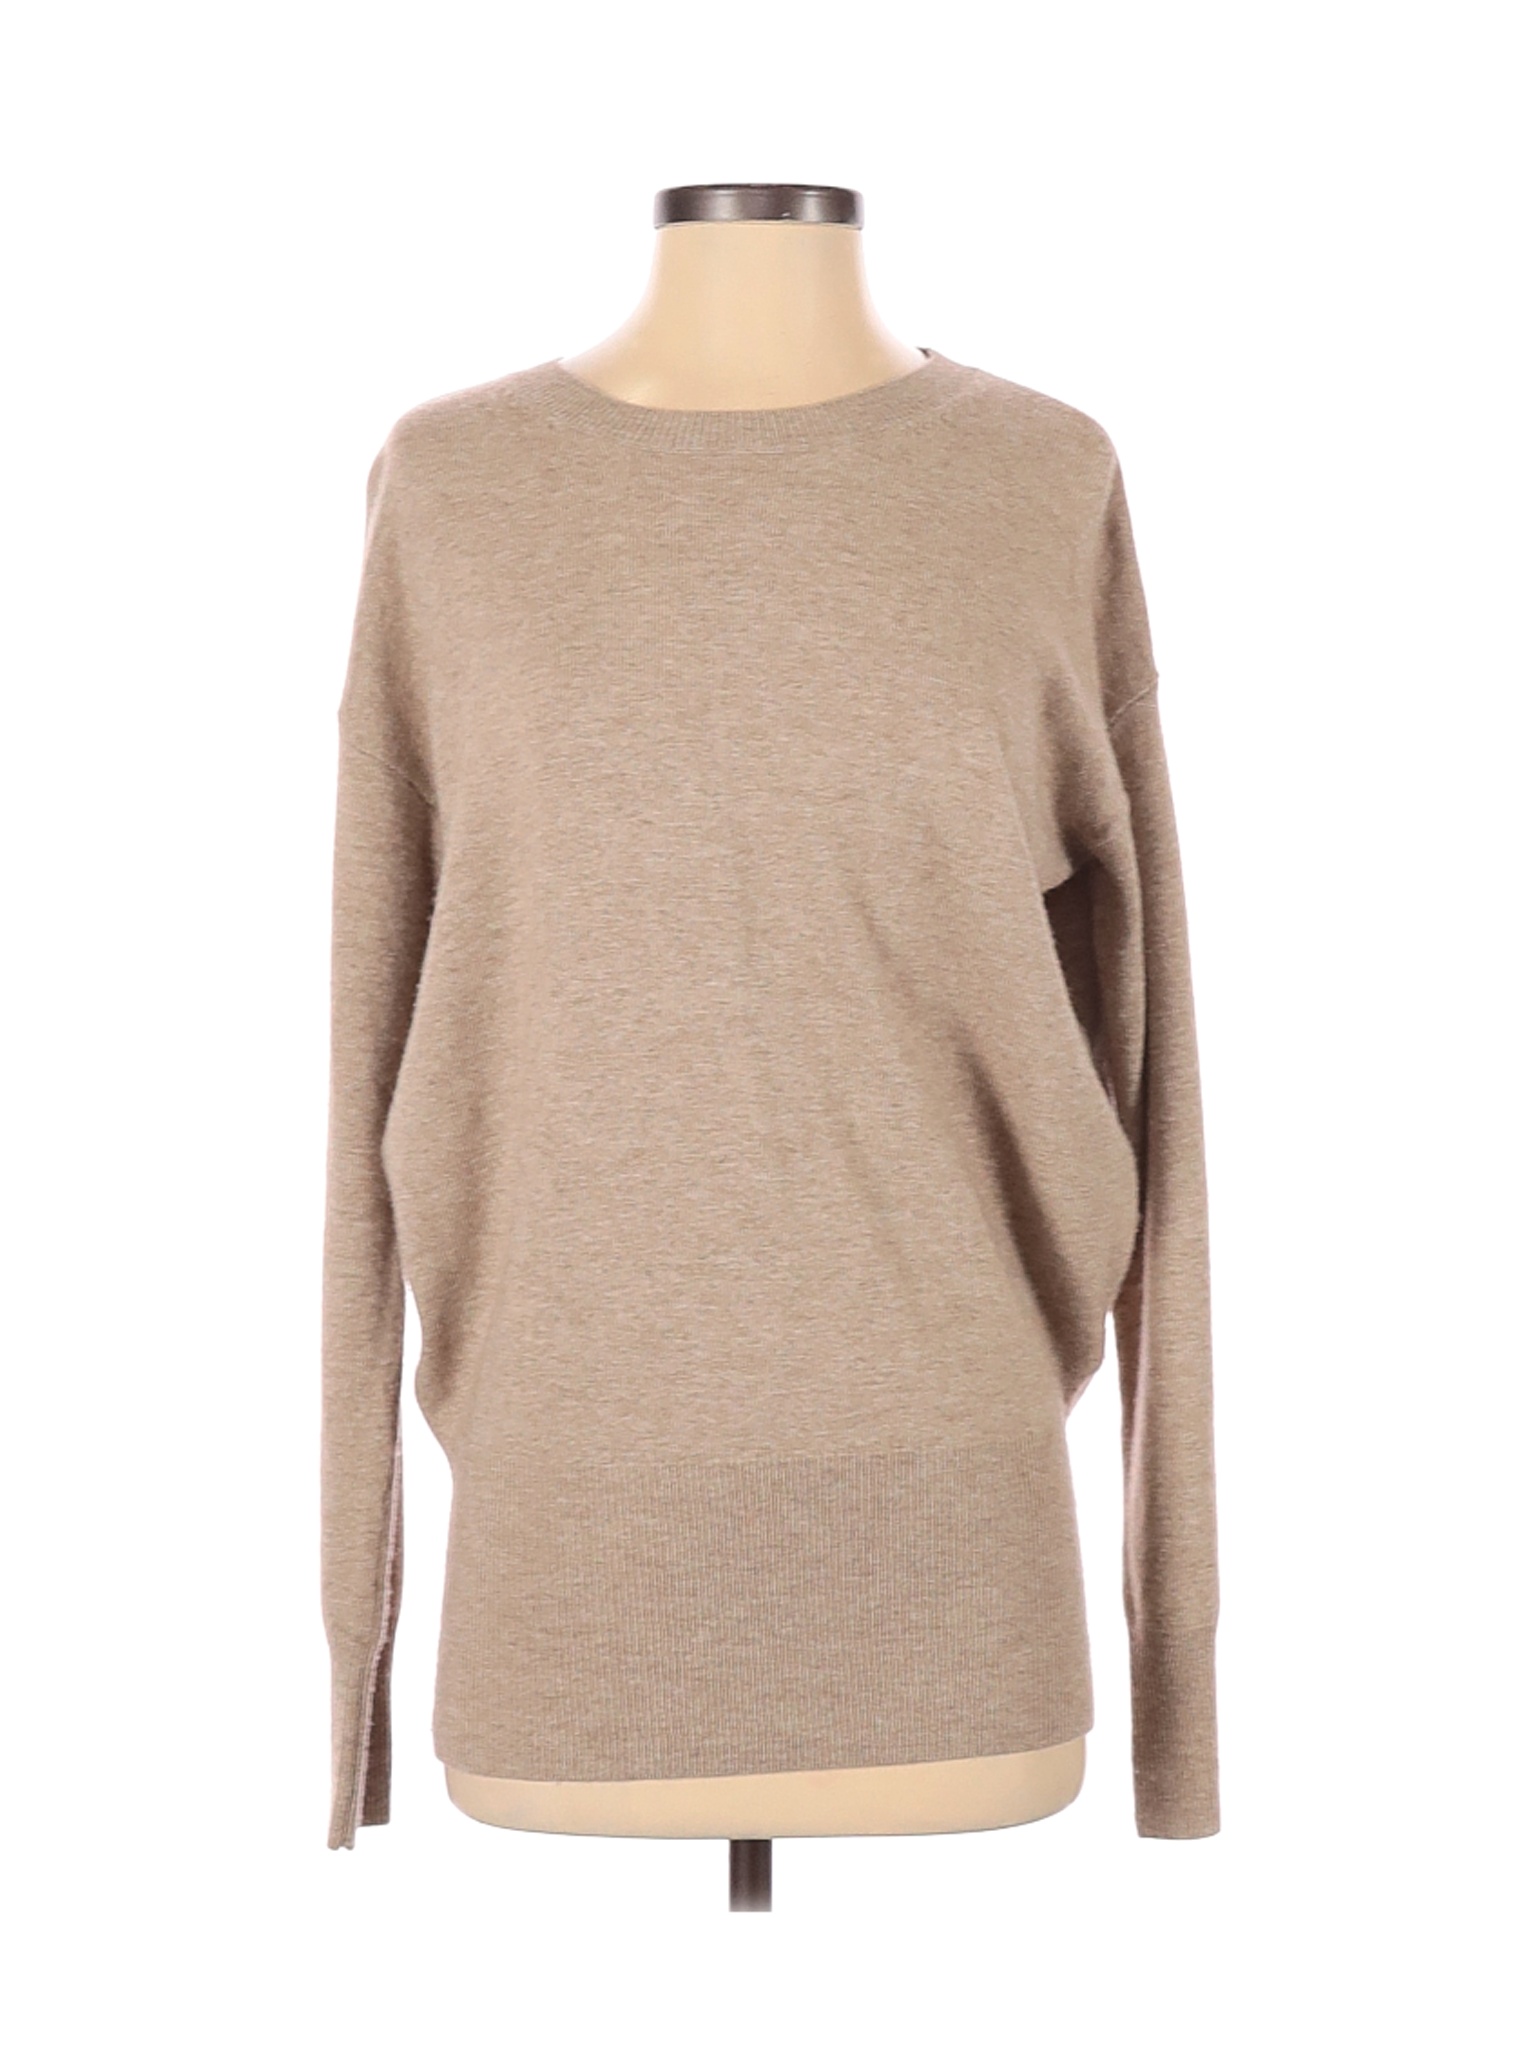 FATE by LFD Women Brown Pullover Sweater S | eBay